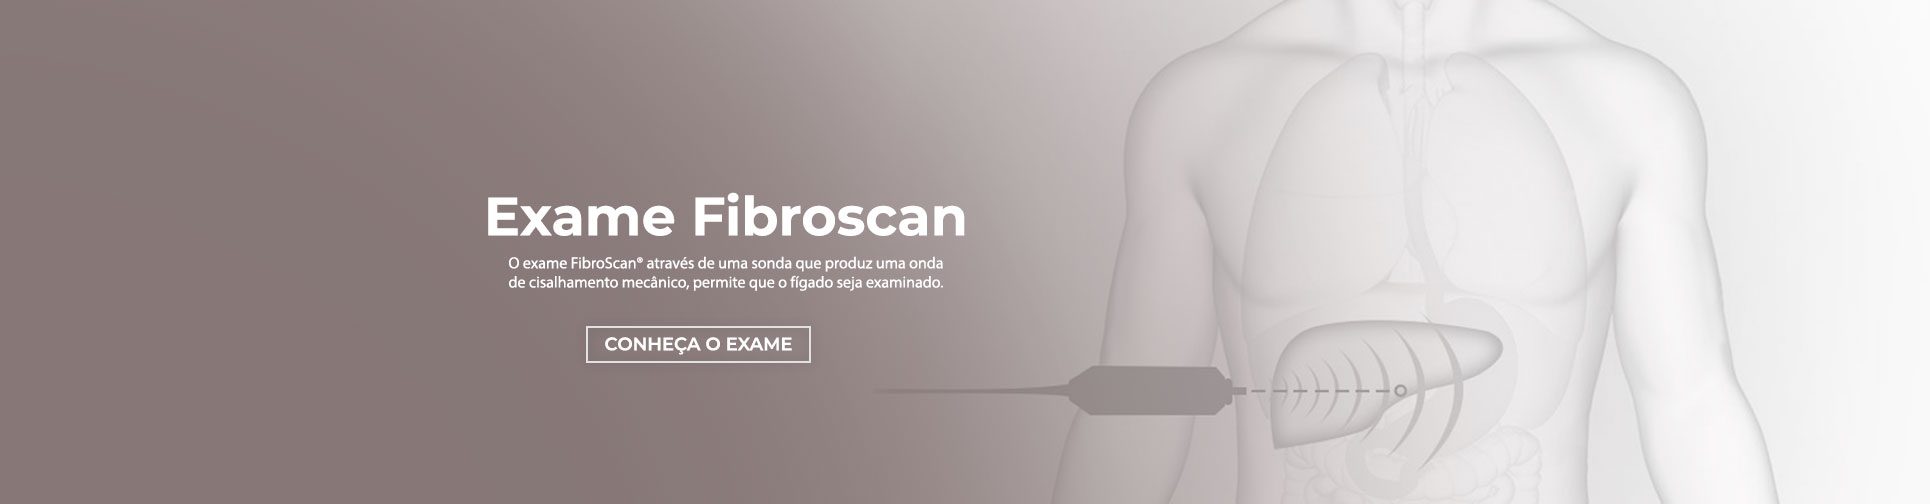 Banner Exame Fibroscan | Clínica Hepatogastro